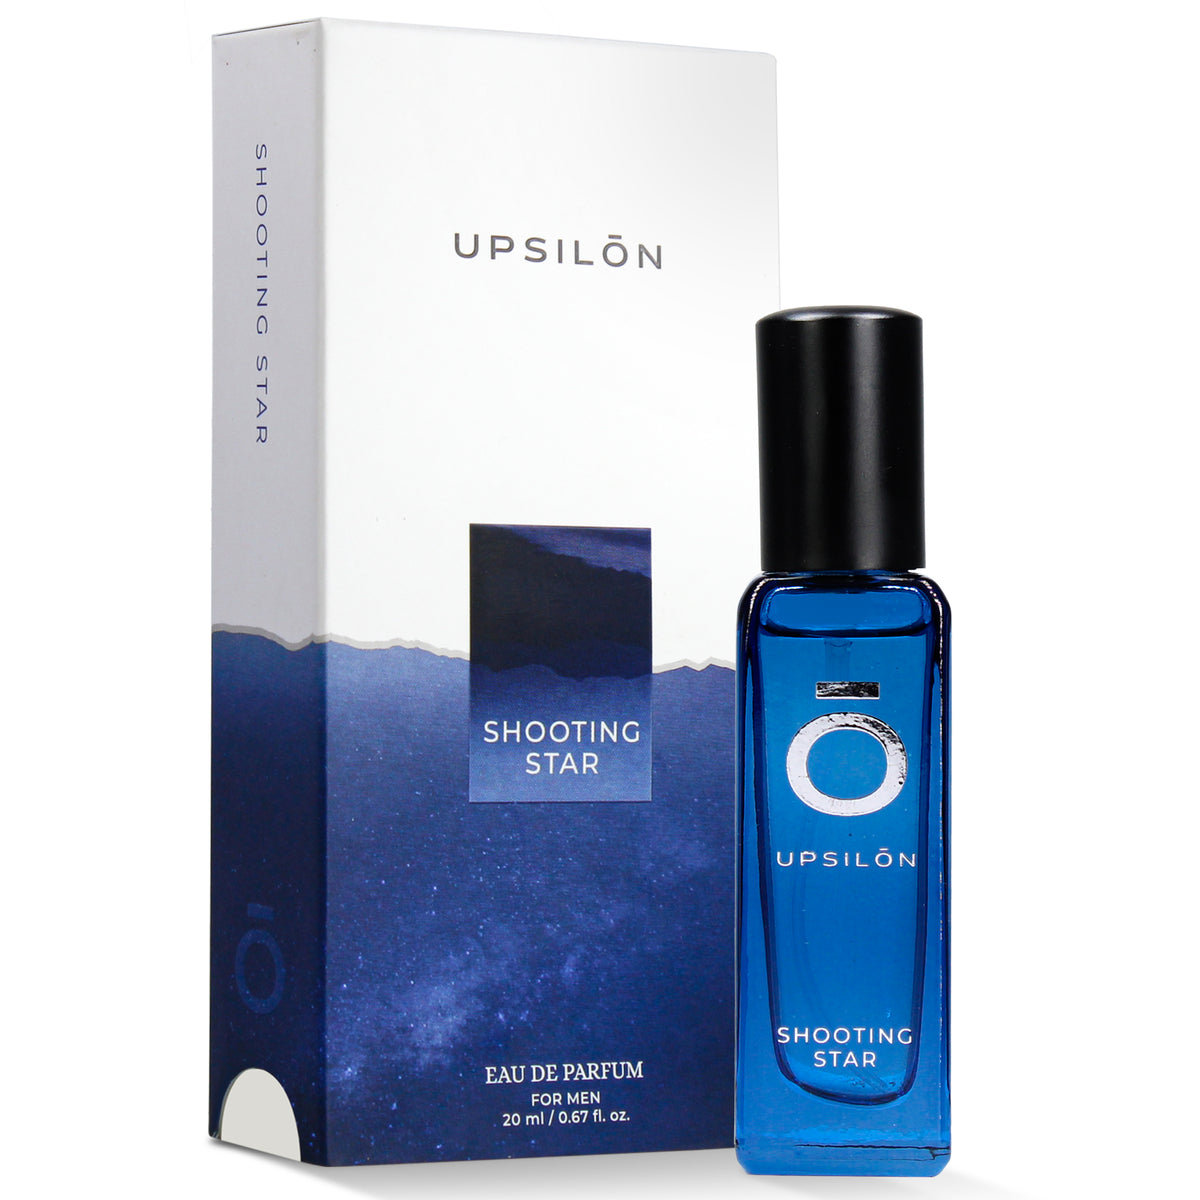 upsilon 20-ml spicy perfume for men